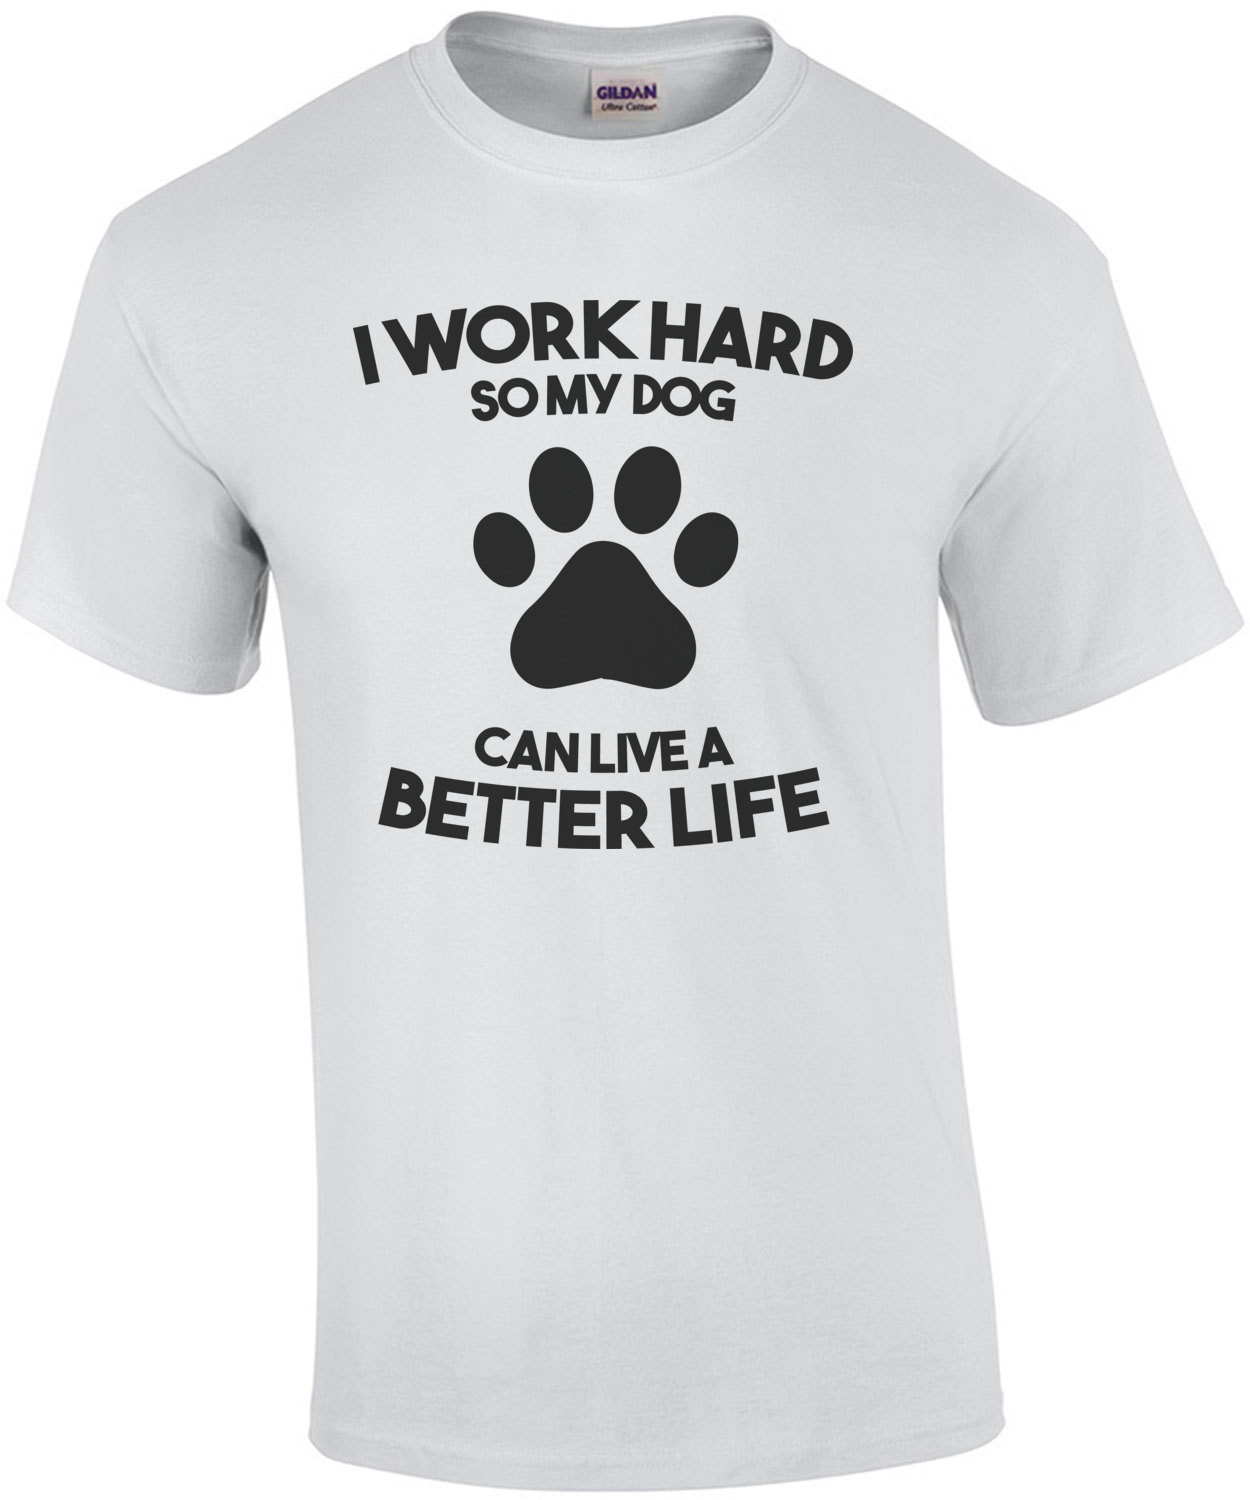 I work hard so my dog can live a better life - dog